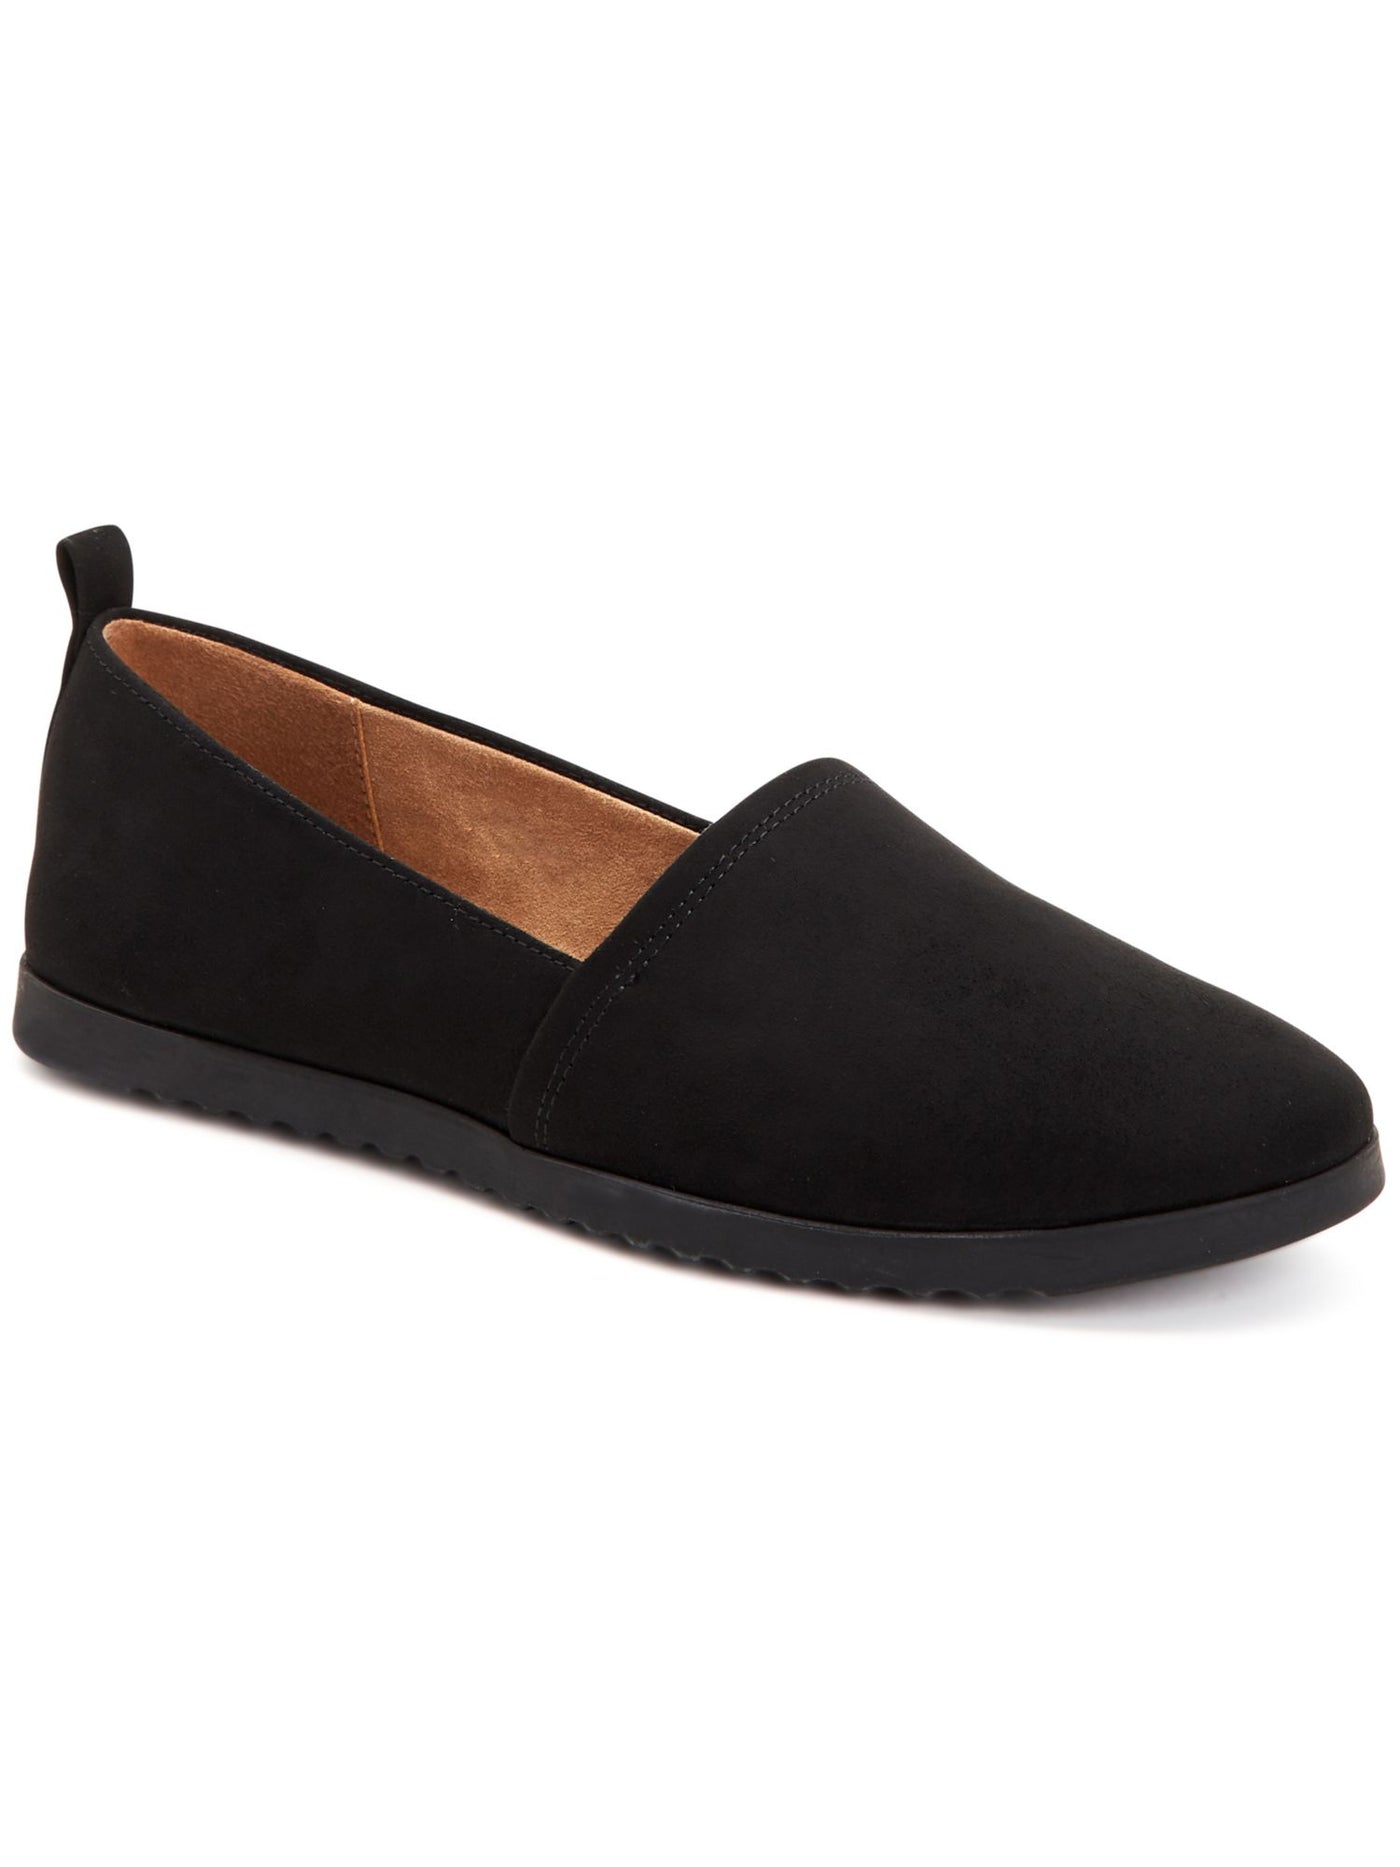 STYLE & COMPANY Womens Black Goring Padded Noura Round Toe Slip On Flats Shoes 9 M